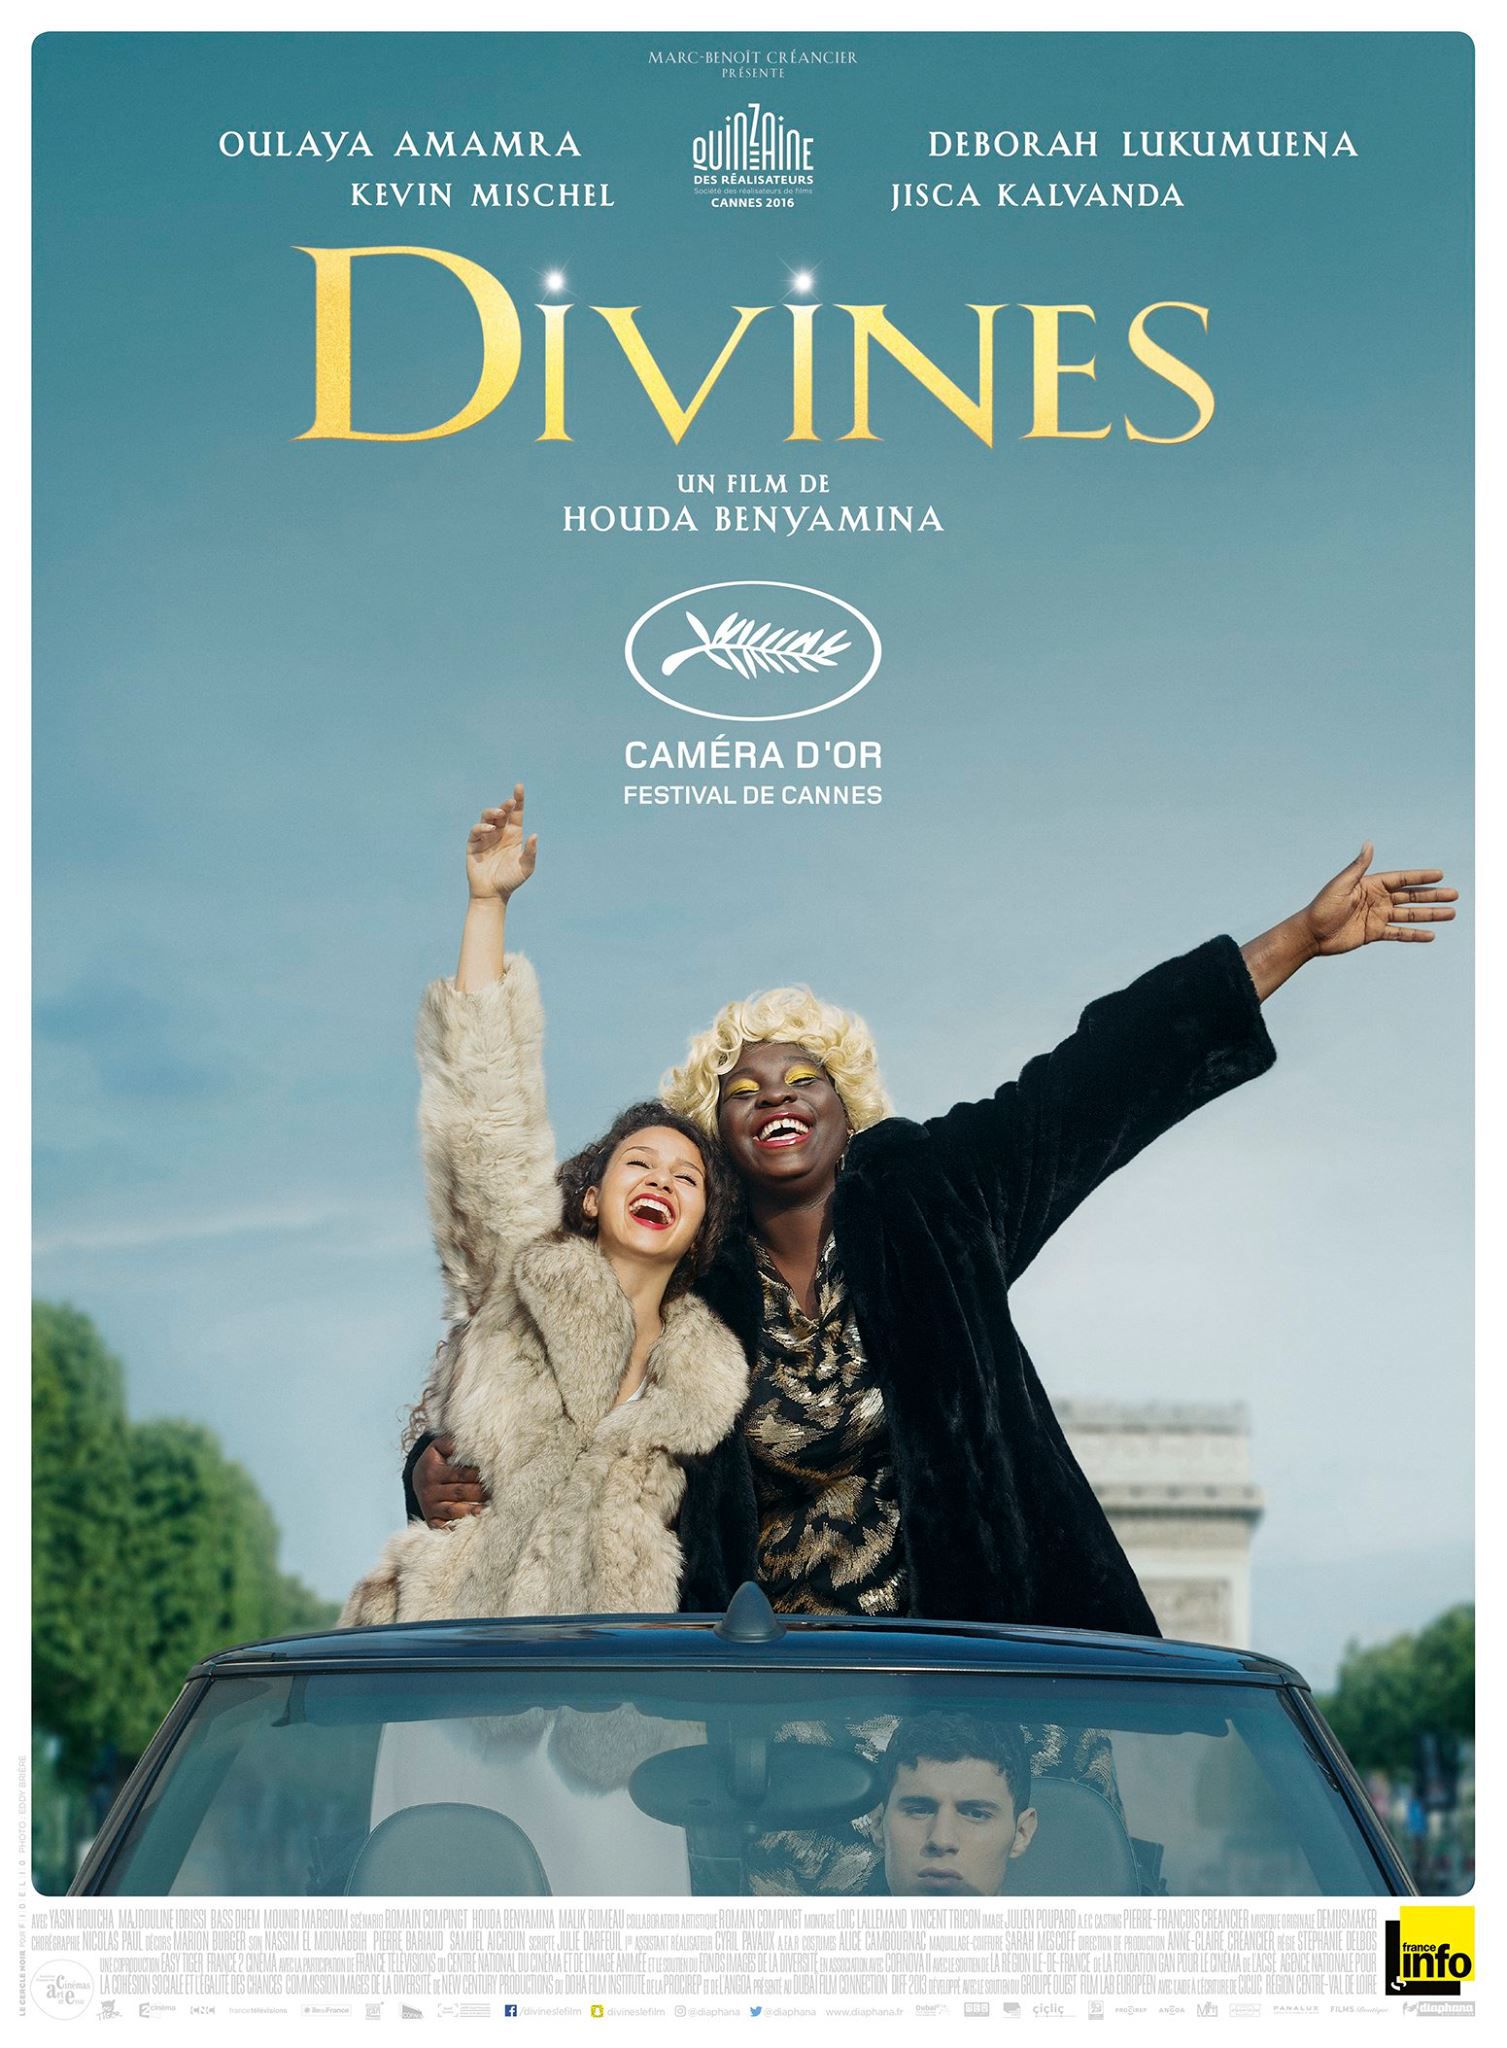 Divines - Film (2016) streaming VF gratuit complet